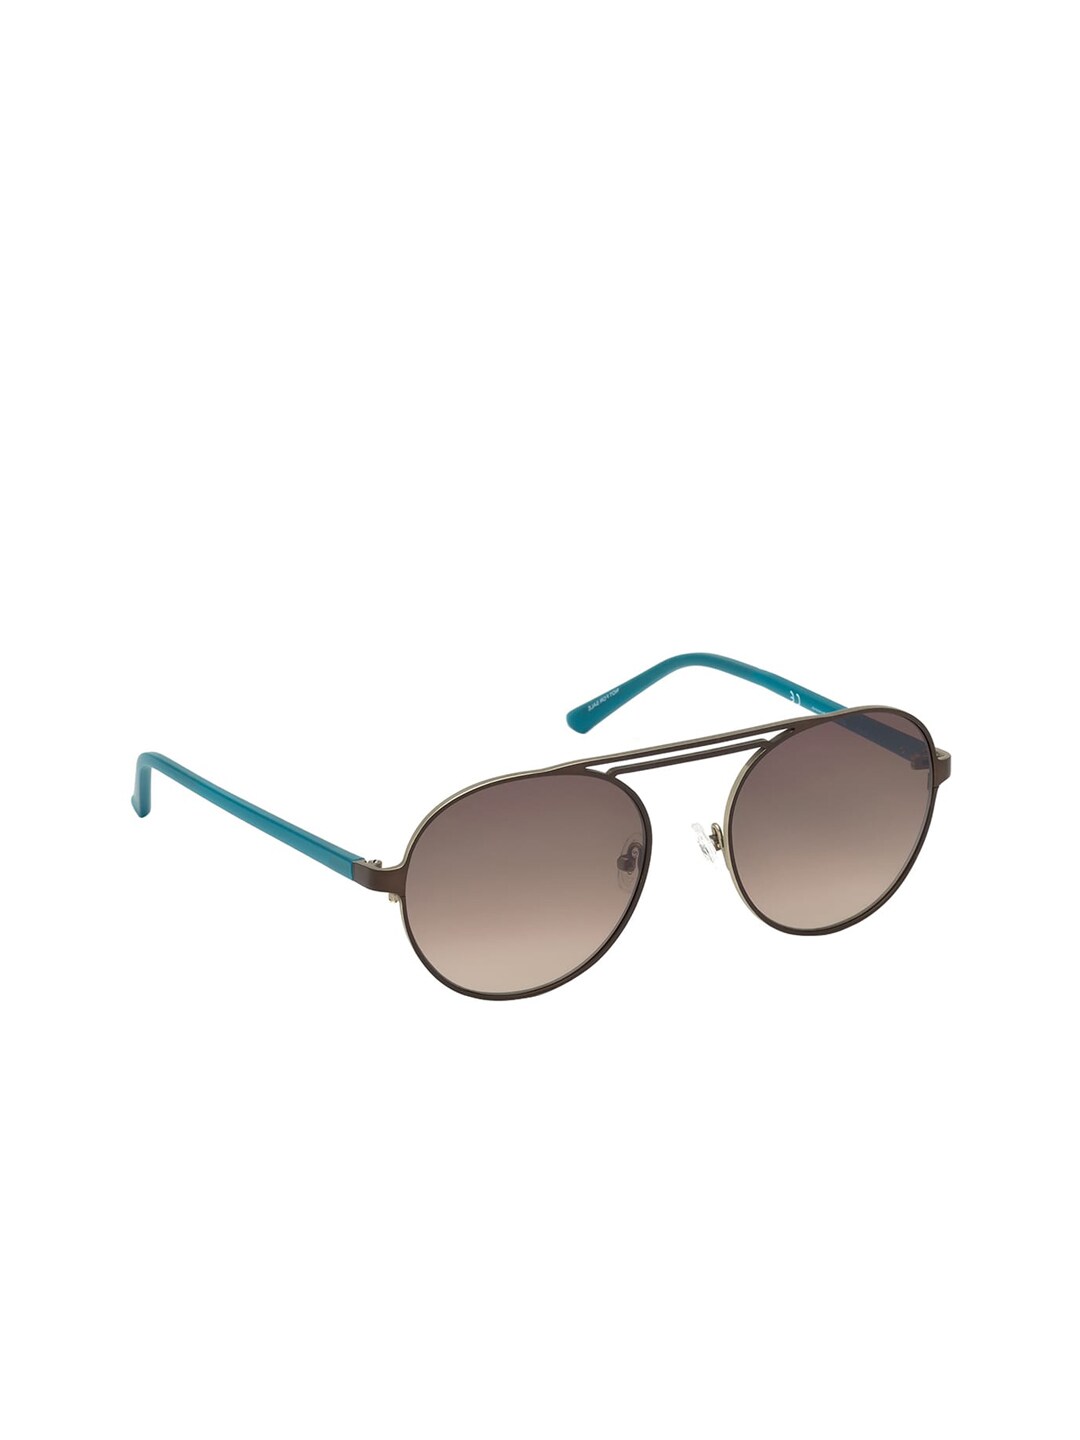 GUESS Unisex Round Sunglasses GU3028 55 49F Price in India